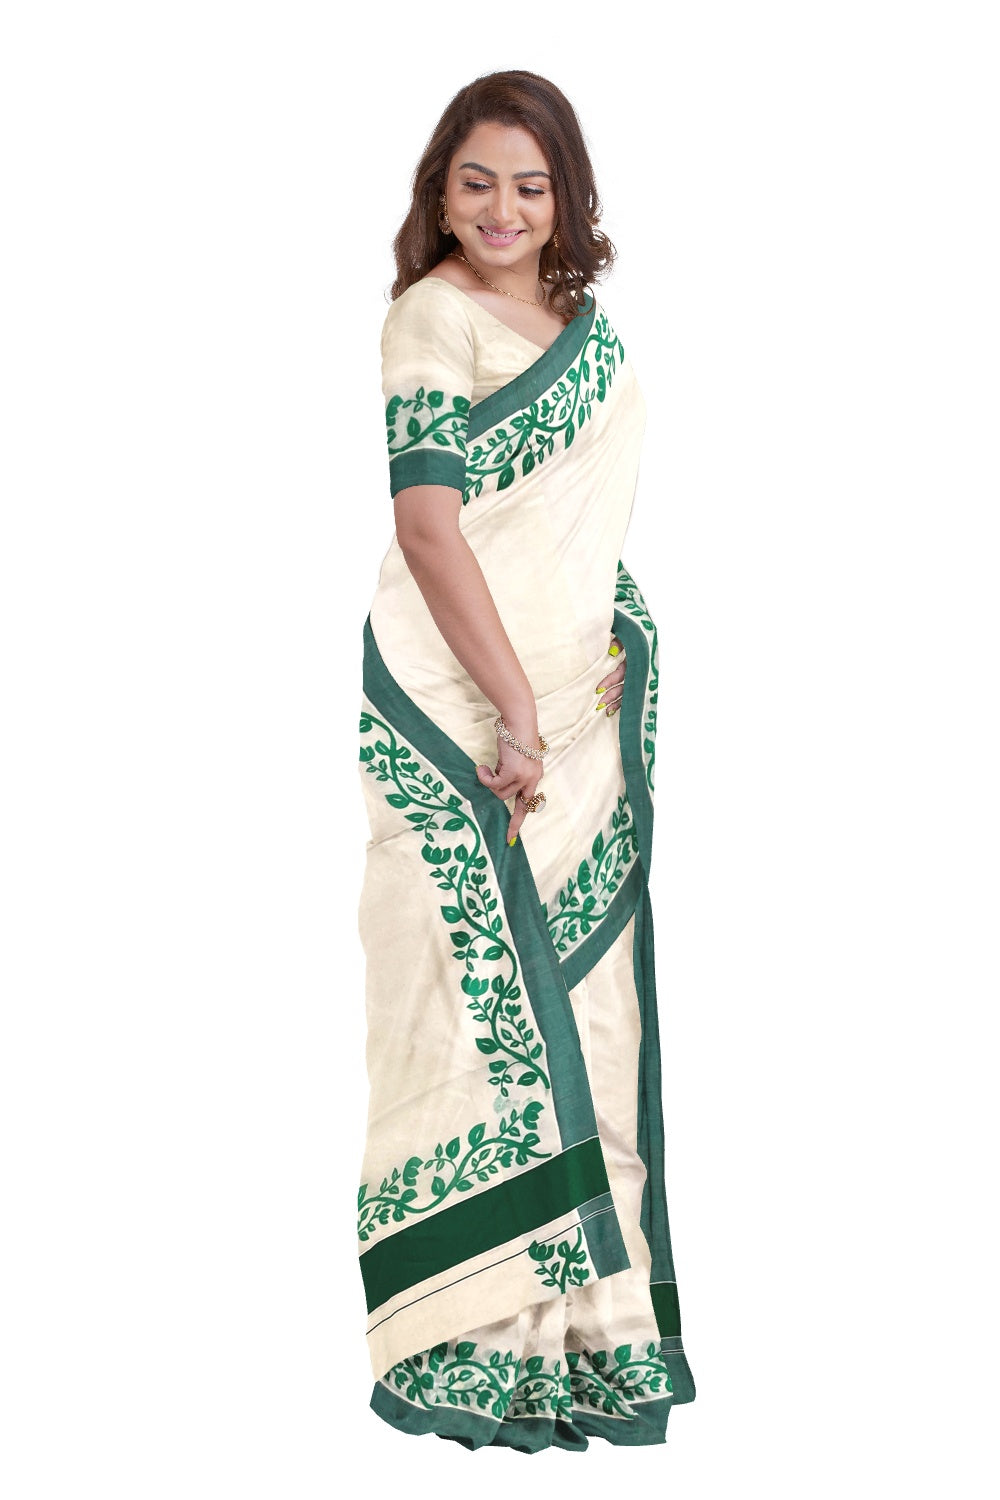 Southloom Original Design Kerala Saree with Green Floral Vines Block Print